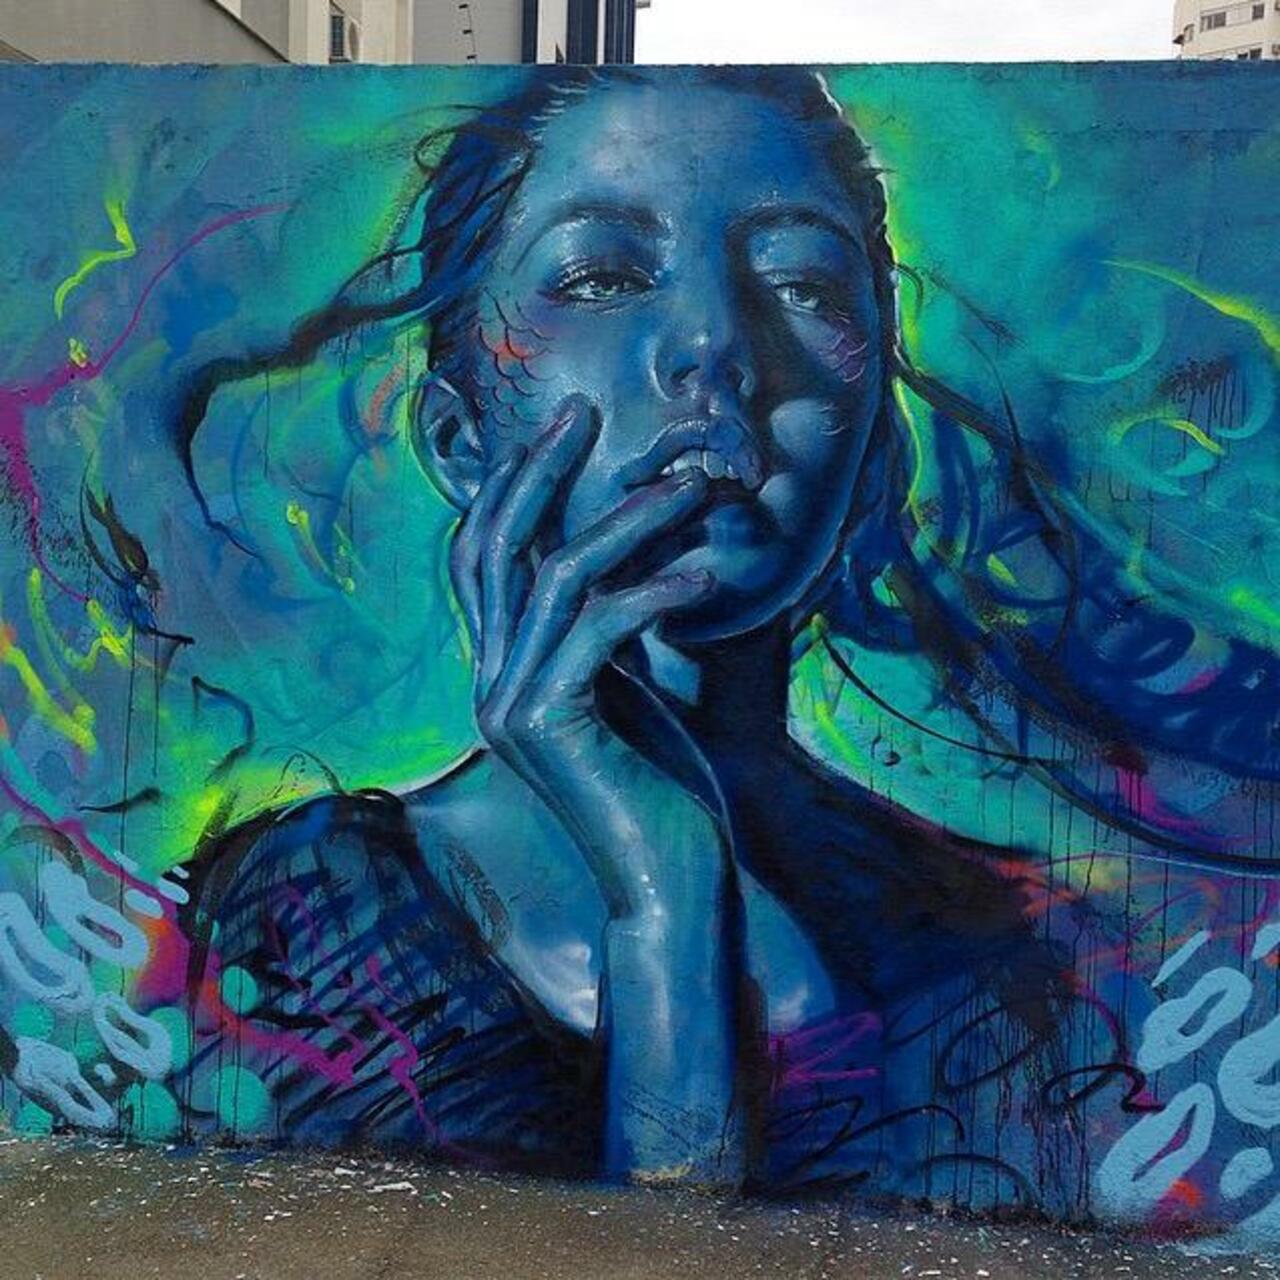 Thiago Valdi new Street Art piece titled 'Day Dreamer' #art #mural #graffiti #streetart http://t.co/3UodbQm48I …… http://twitter.com/GoogleStreetArt/status/652604458048876544/photo/1/large?utm_source=fb&utm_medium=fb&utm_campaign=charlesjackso14&utm_content=652728474596208640